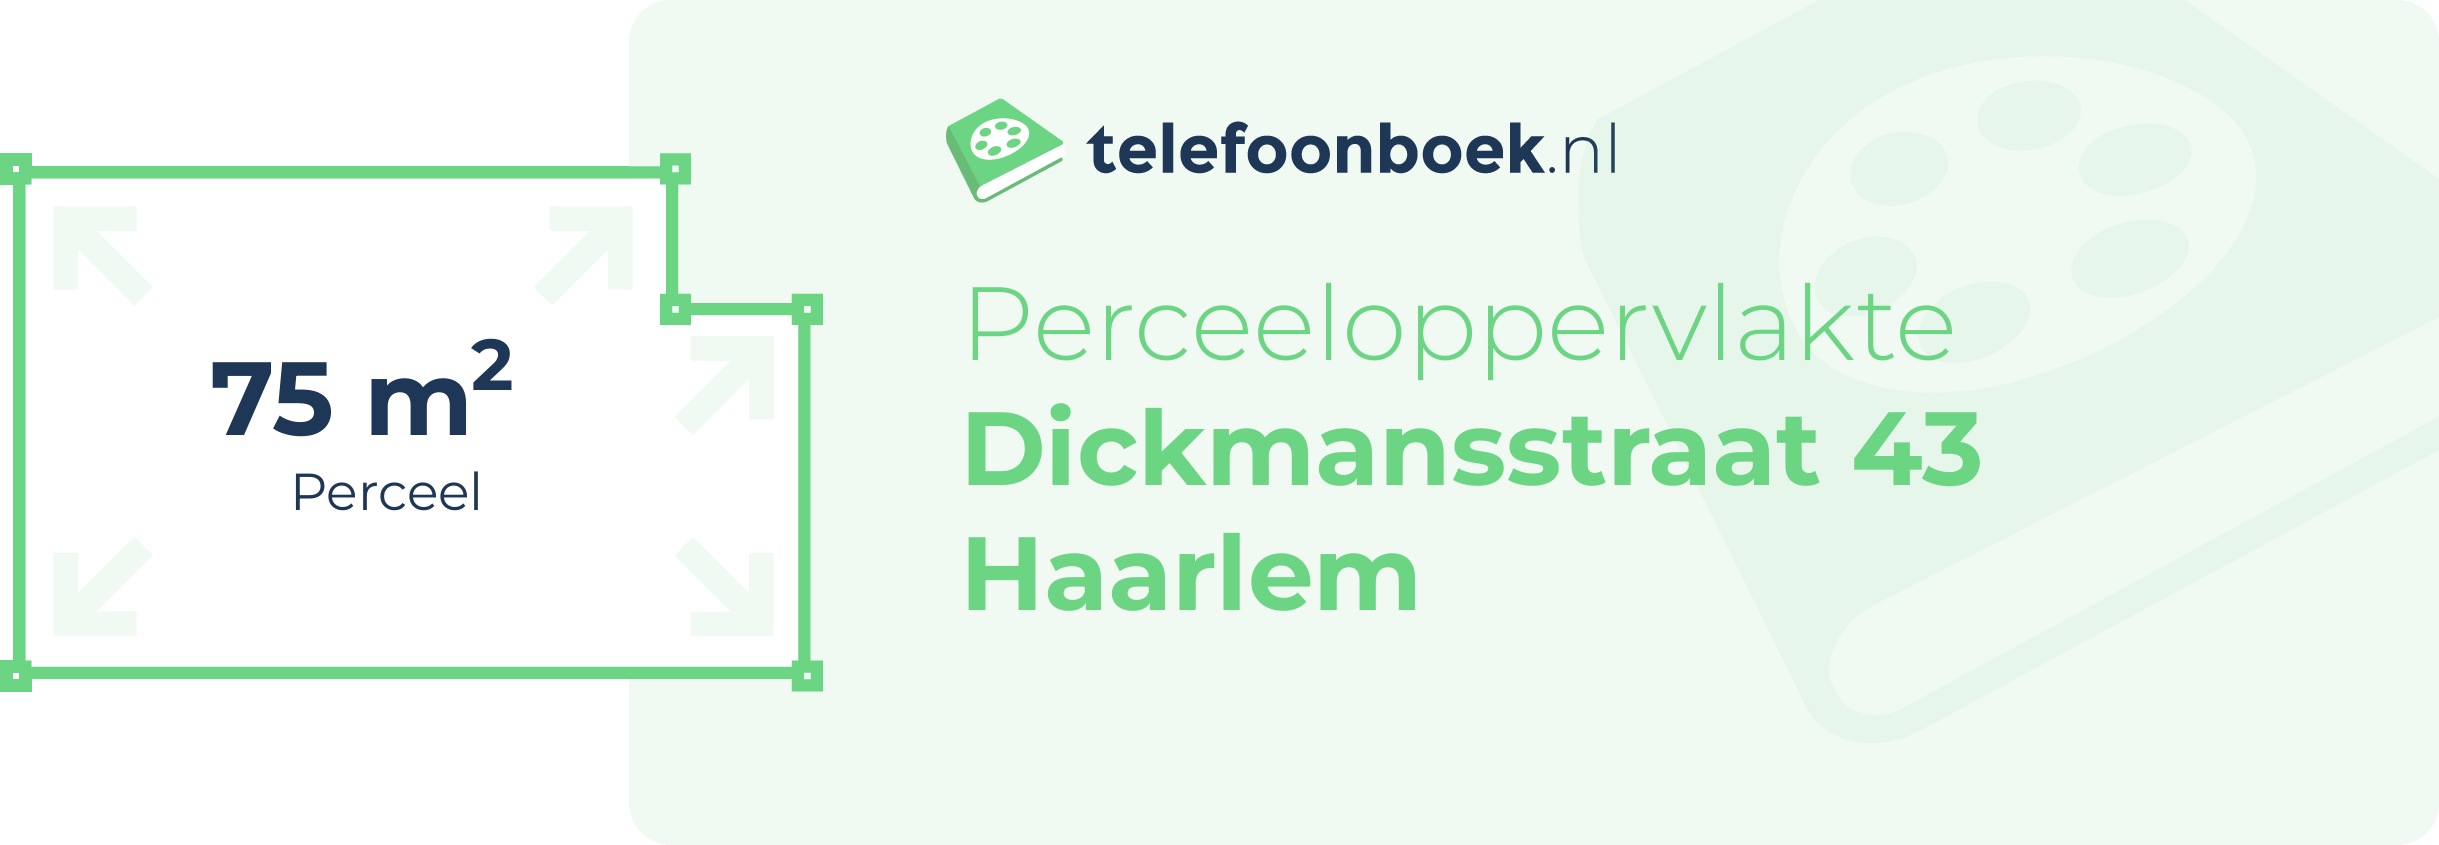 Perceeloppervlakte Dickmansstraat 43 Haarlem